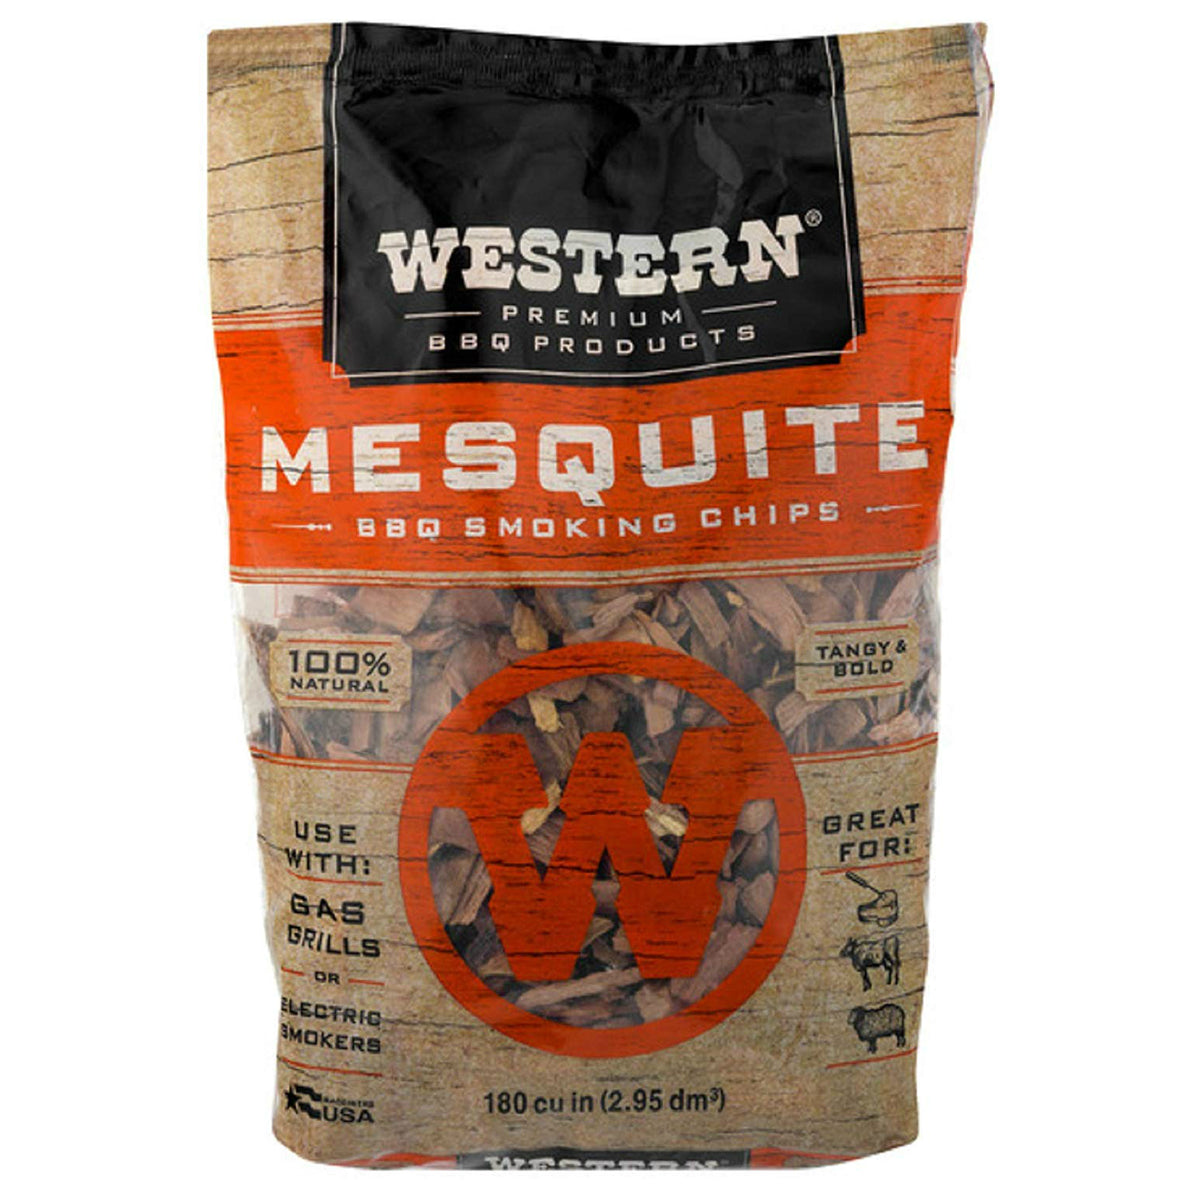 Western 18074 Mesquite BBQ Smoking Chips, 180 Cu.in.